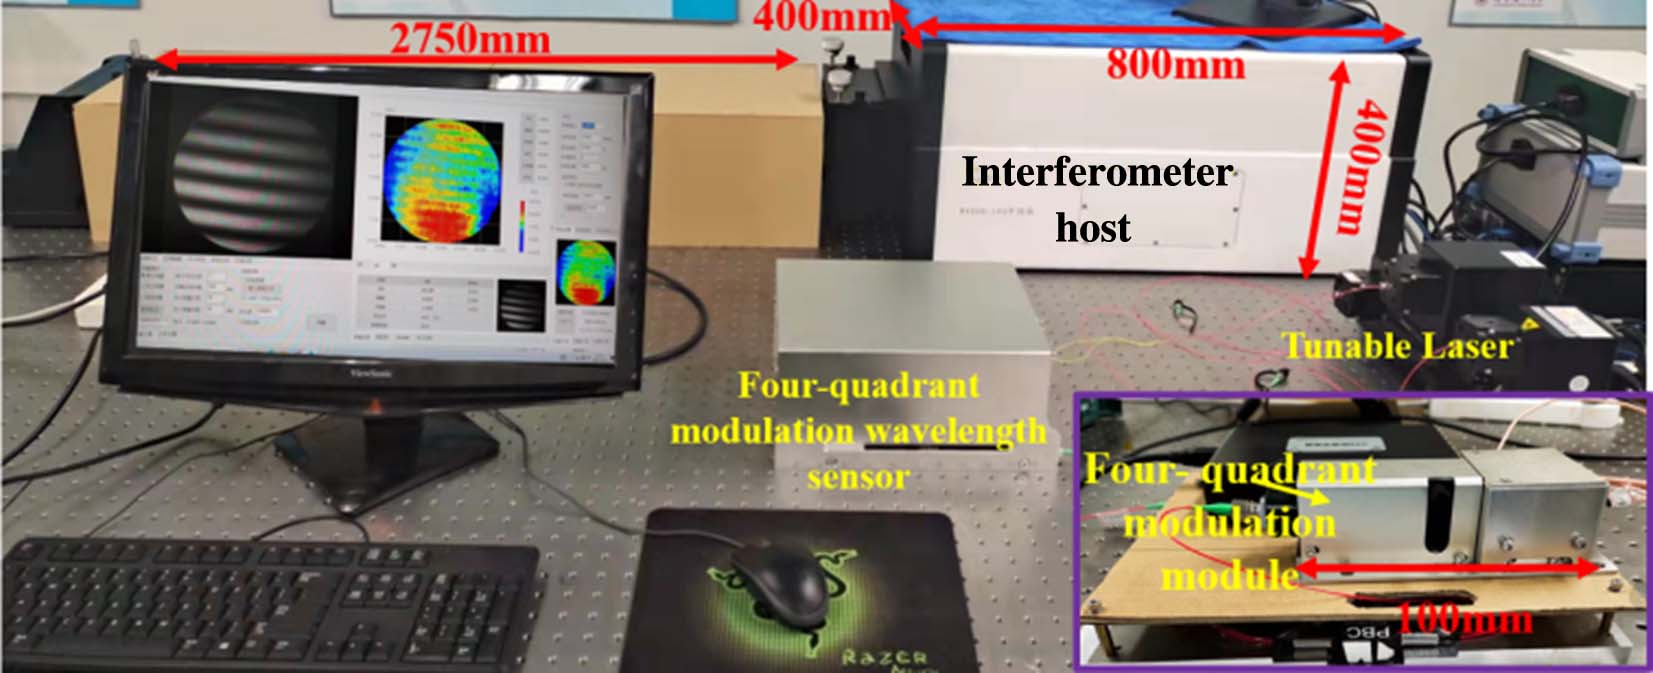 Physical photo of interferometer wavelength monitoring system based on the four-quadrant modulation wavelength sensor.